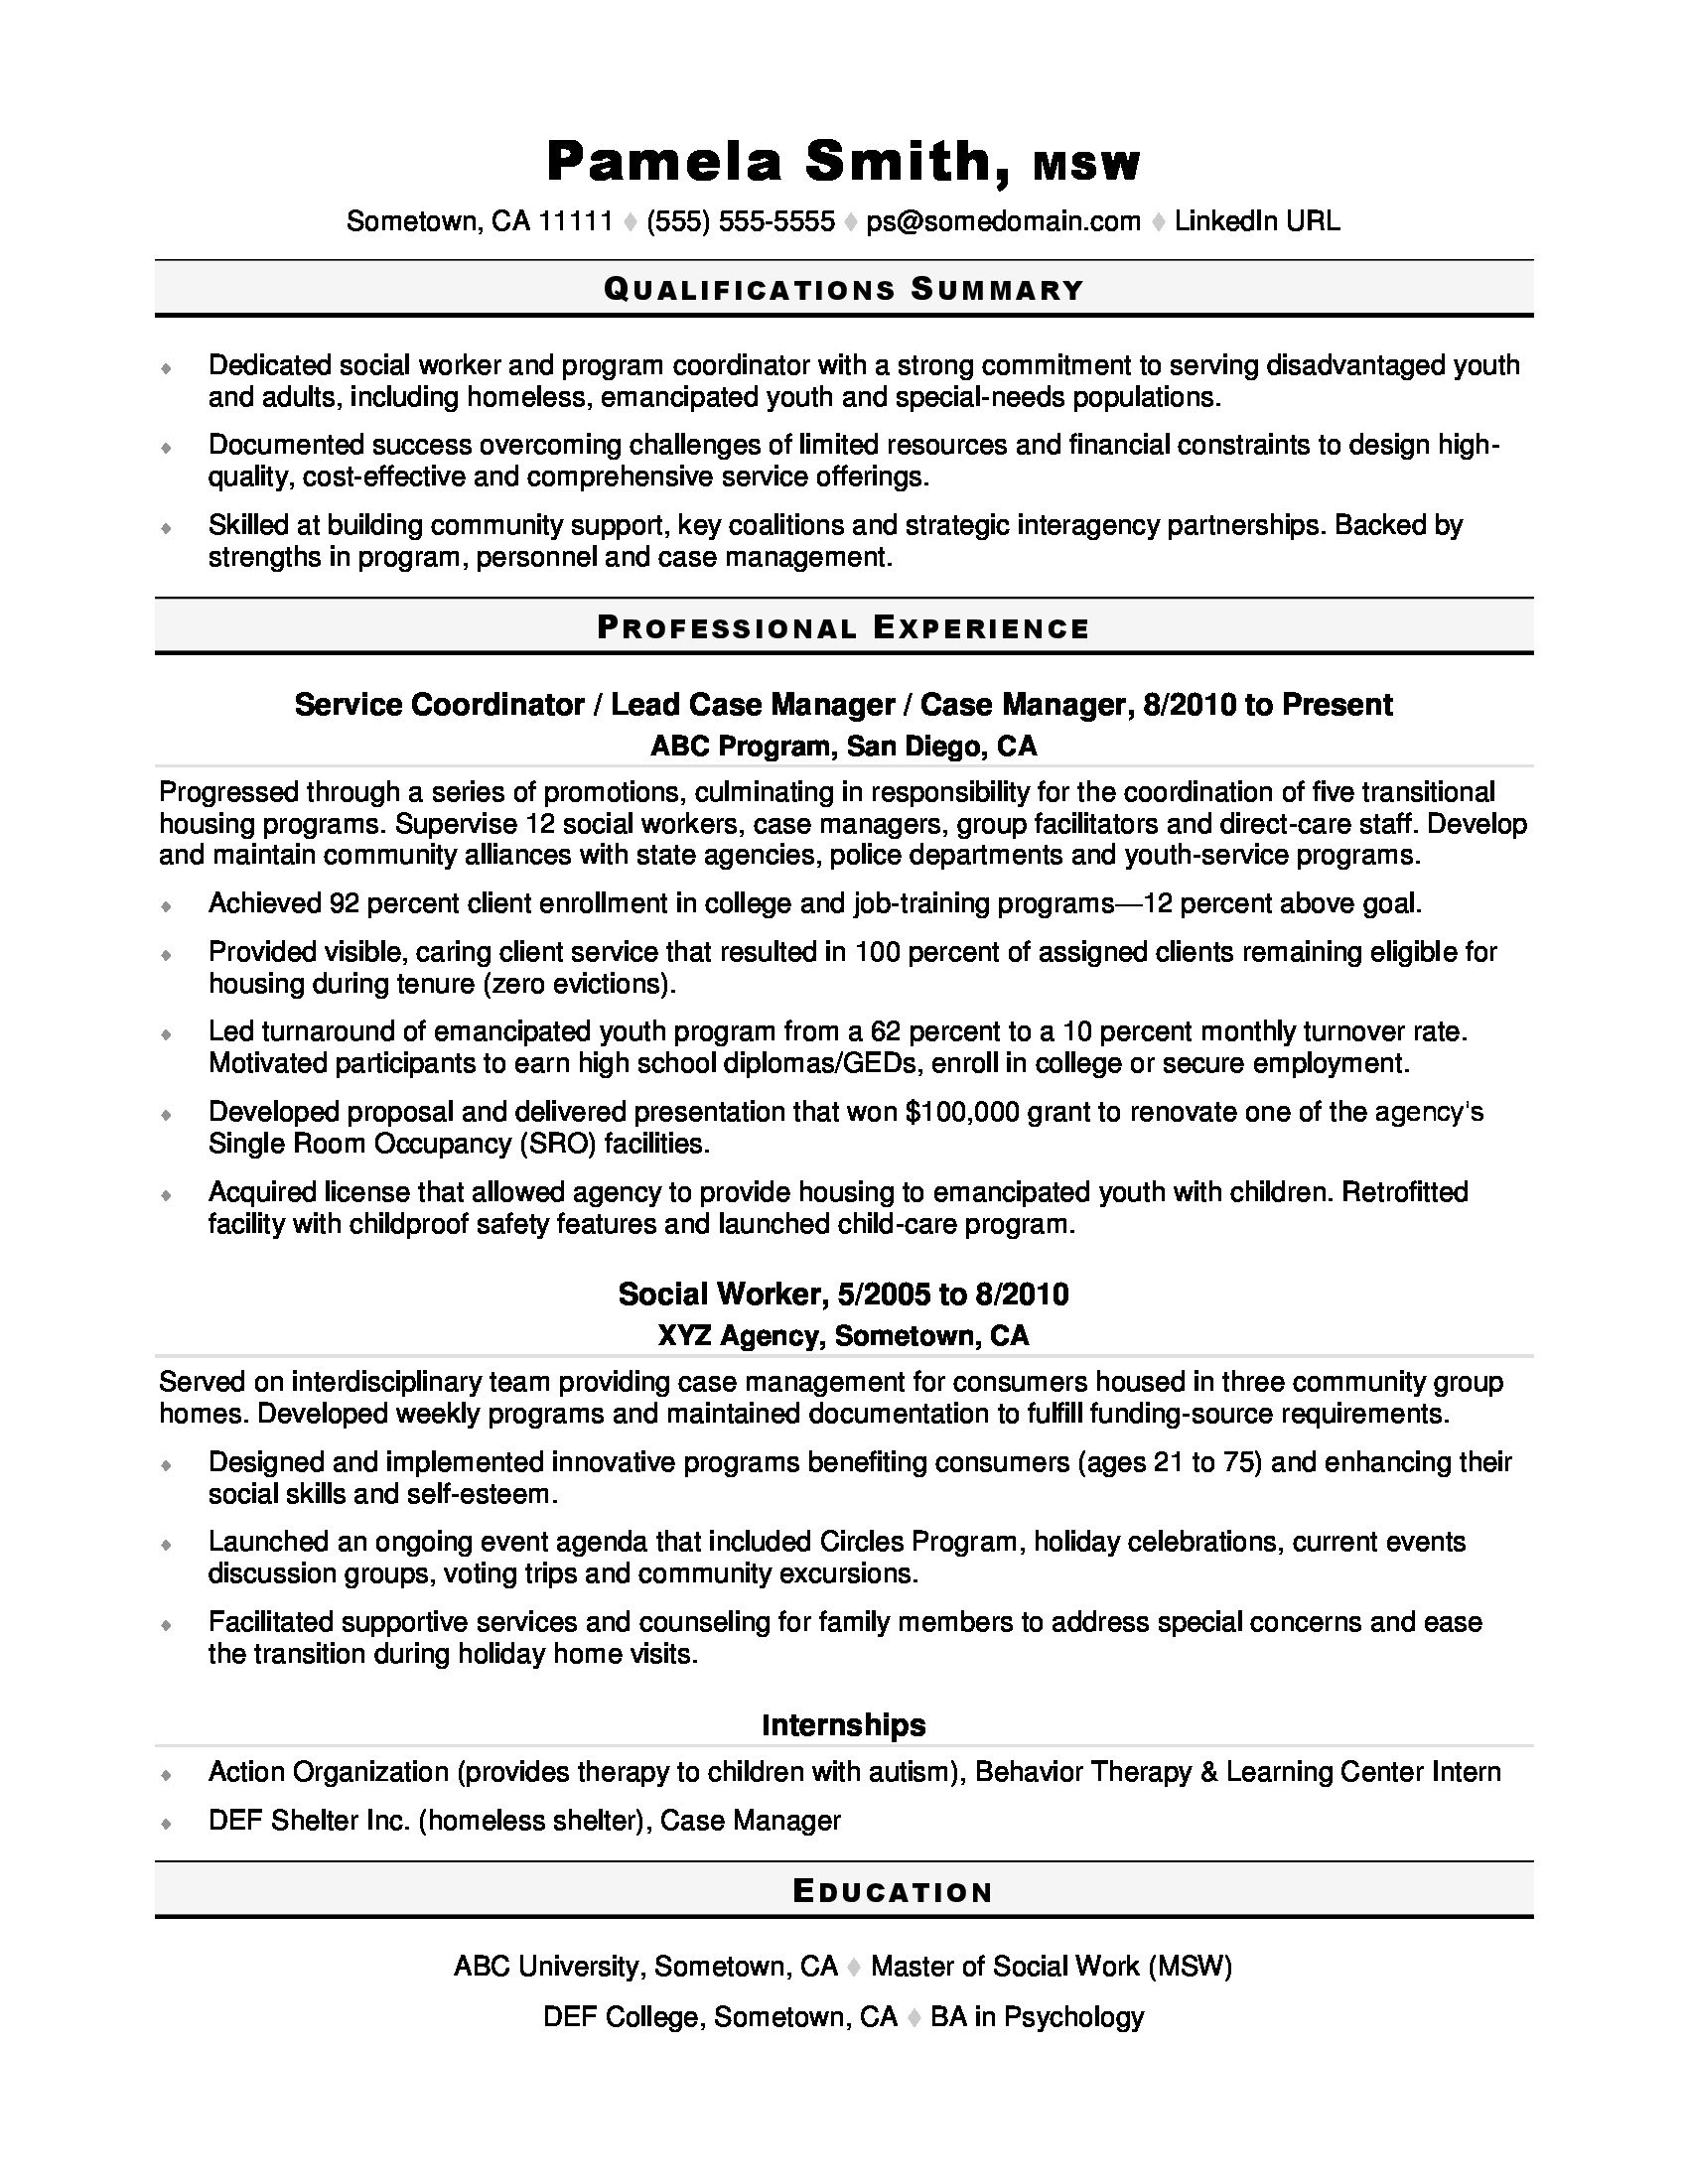 Sample Resume for Human Services Position social Worker Resume Sample Monster.com